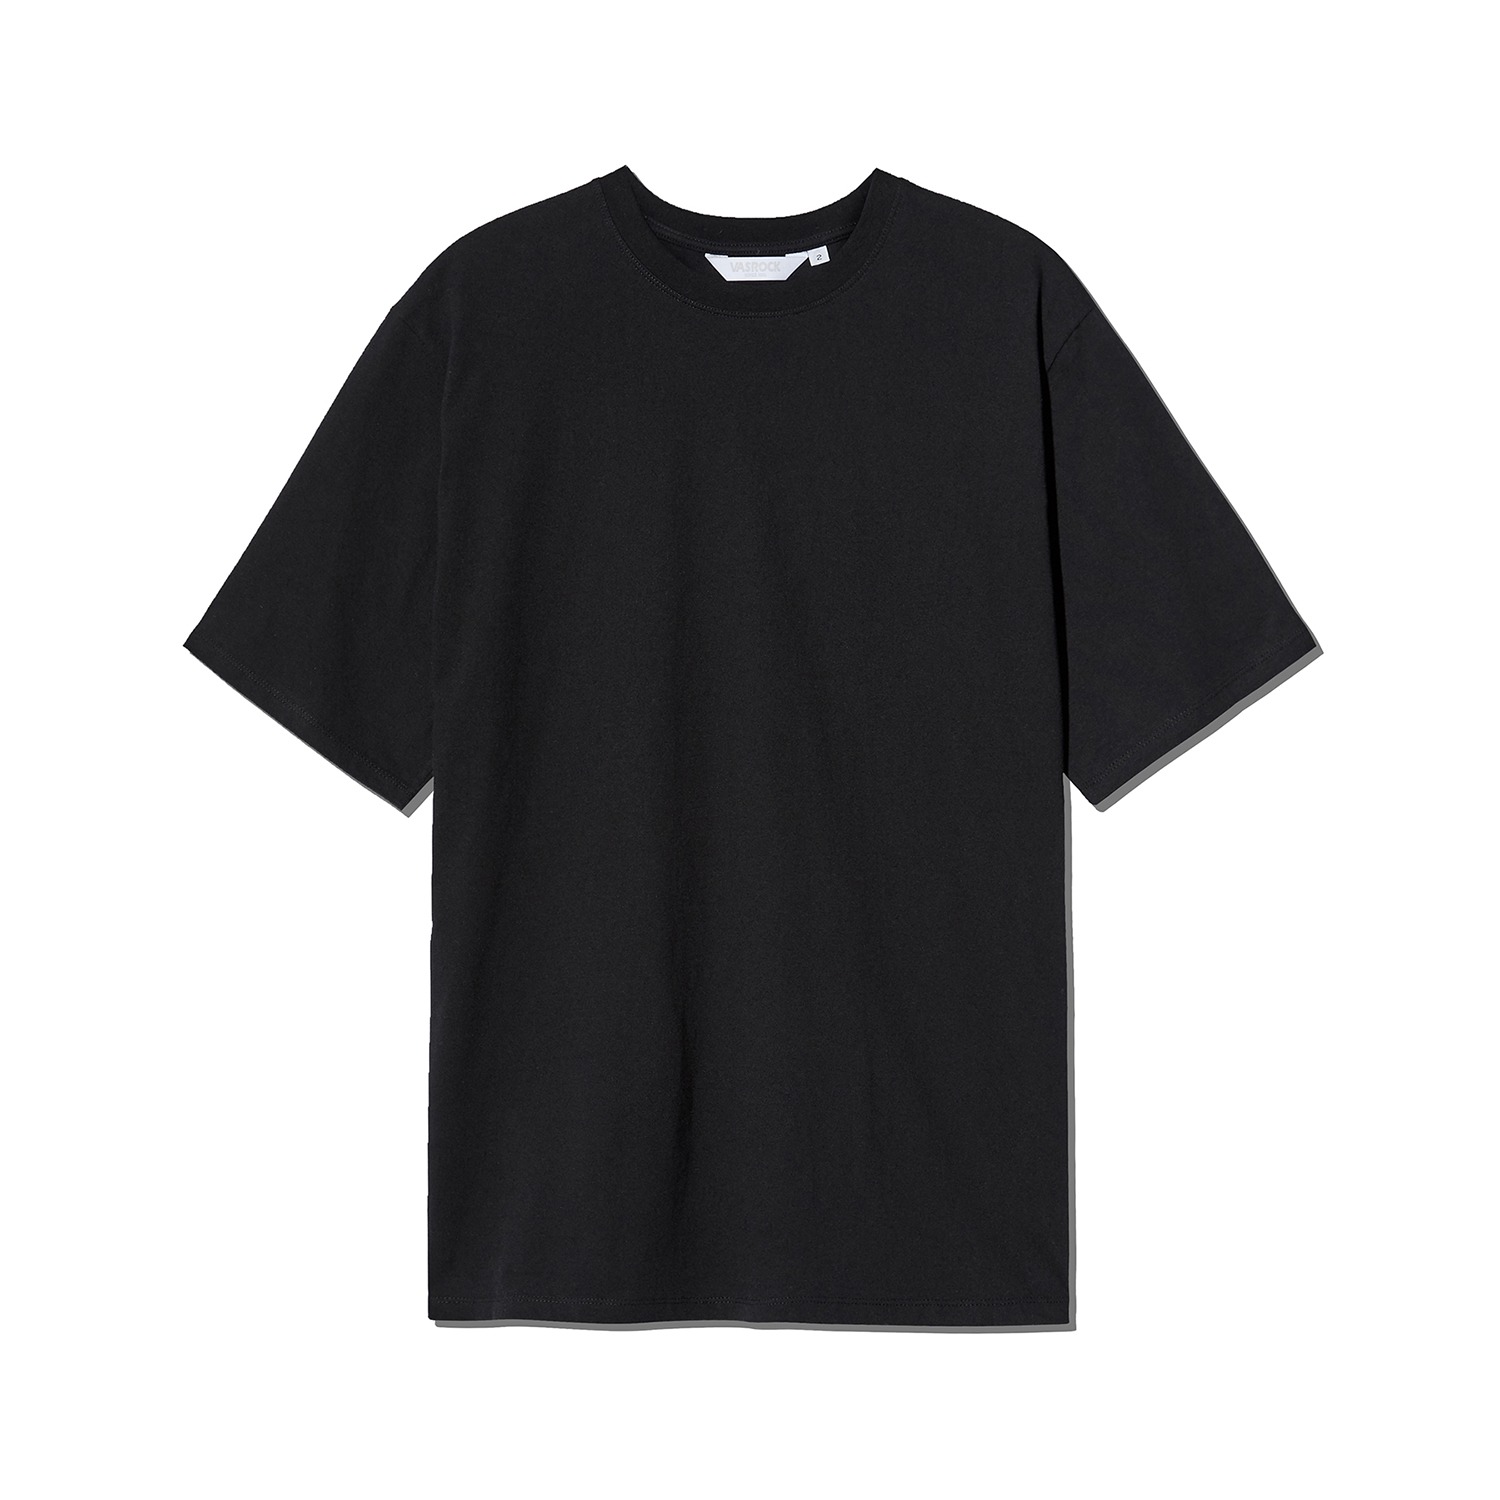 VASROCK,Side Square Short Sleeve T-shirt Black